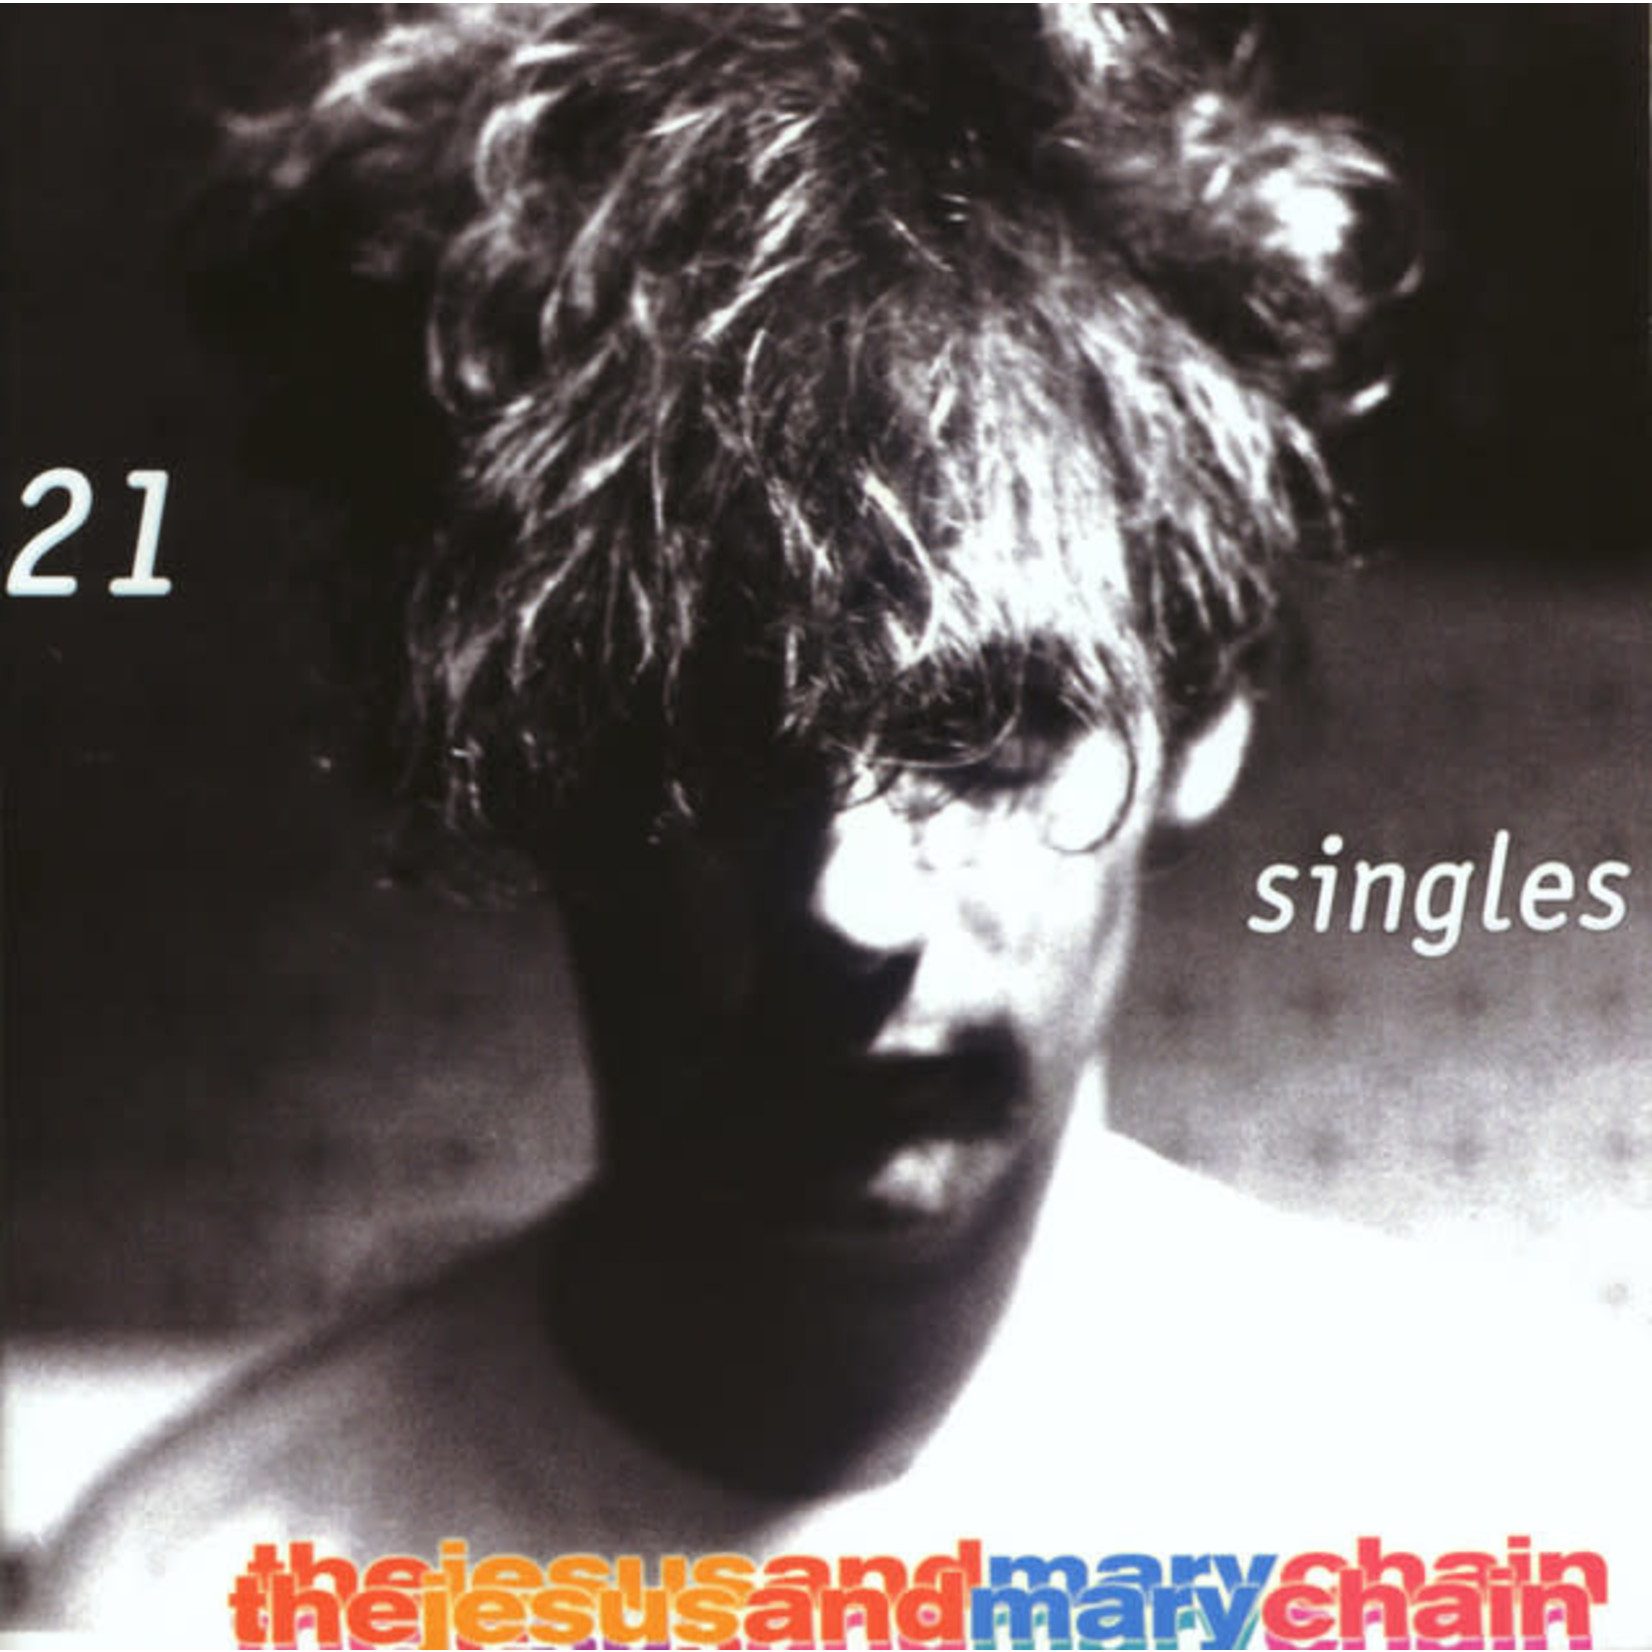 jesus and mary chain 21 singles rar